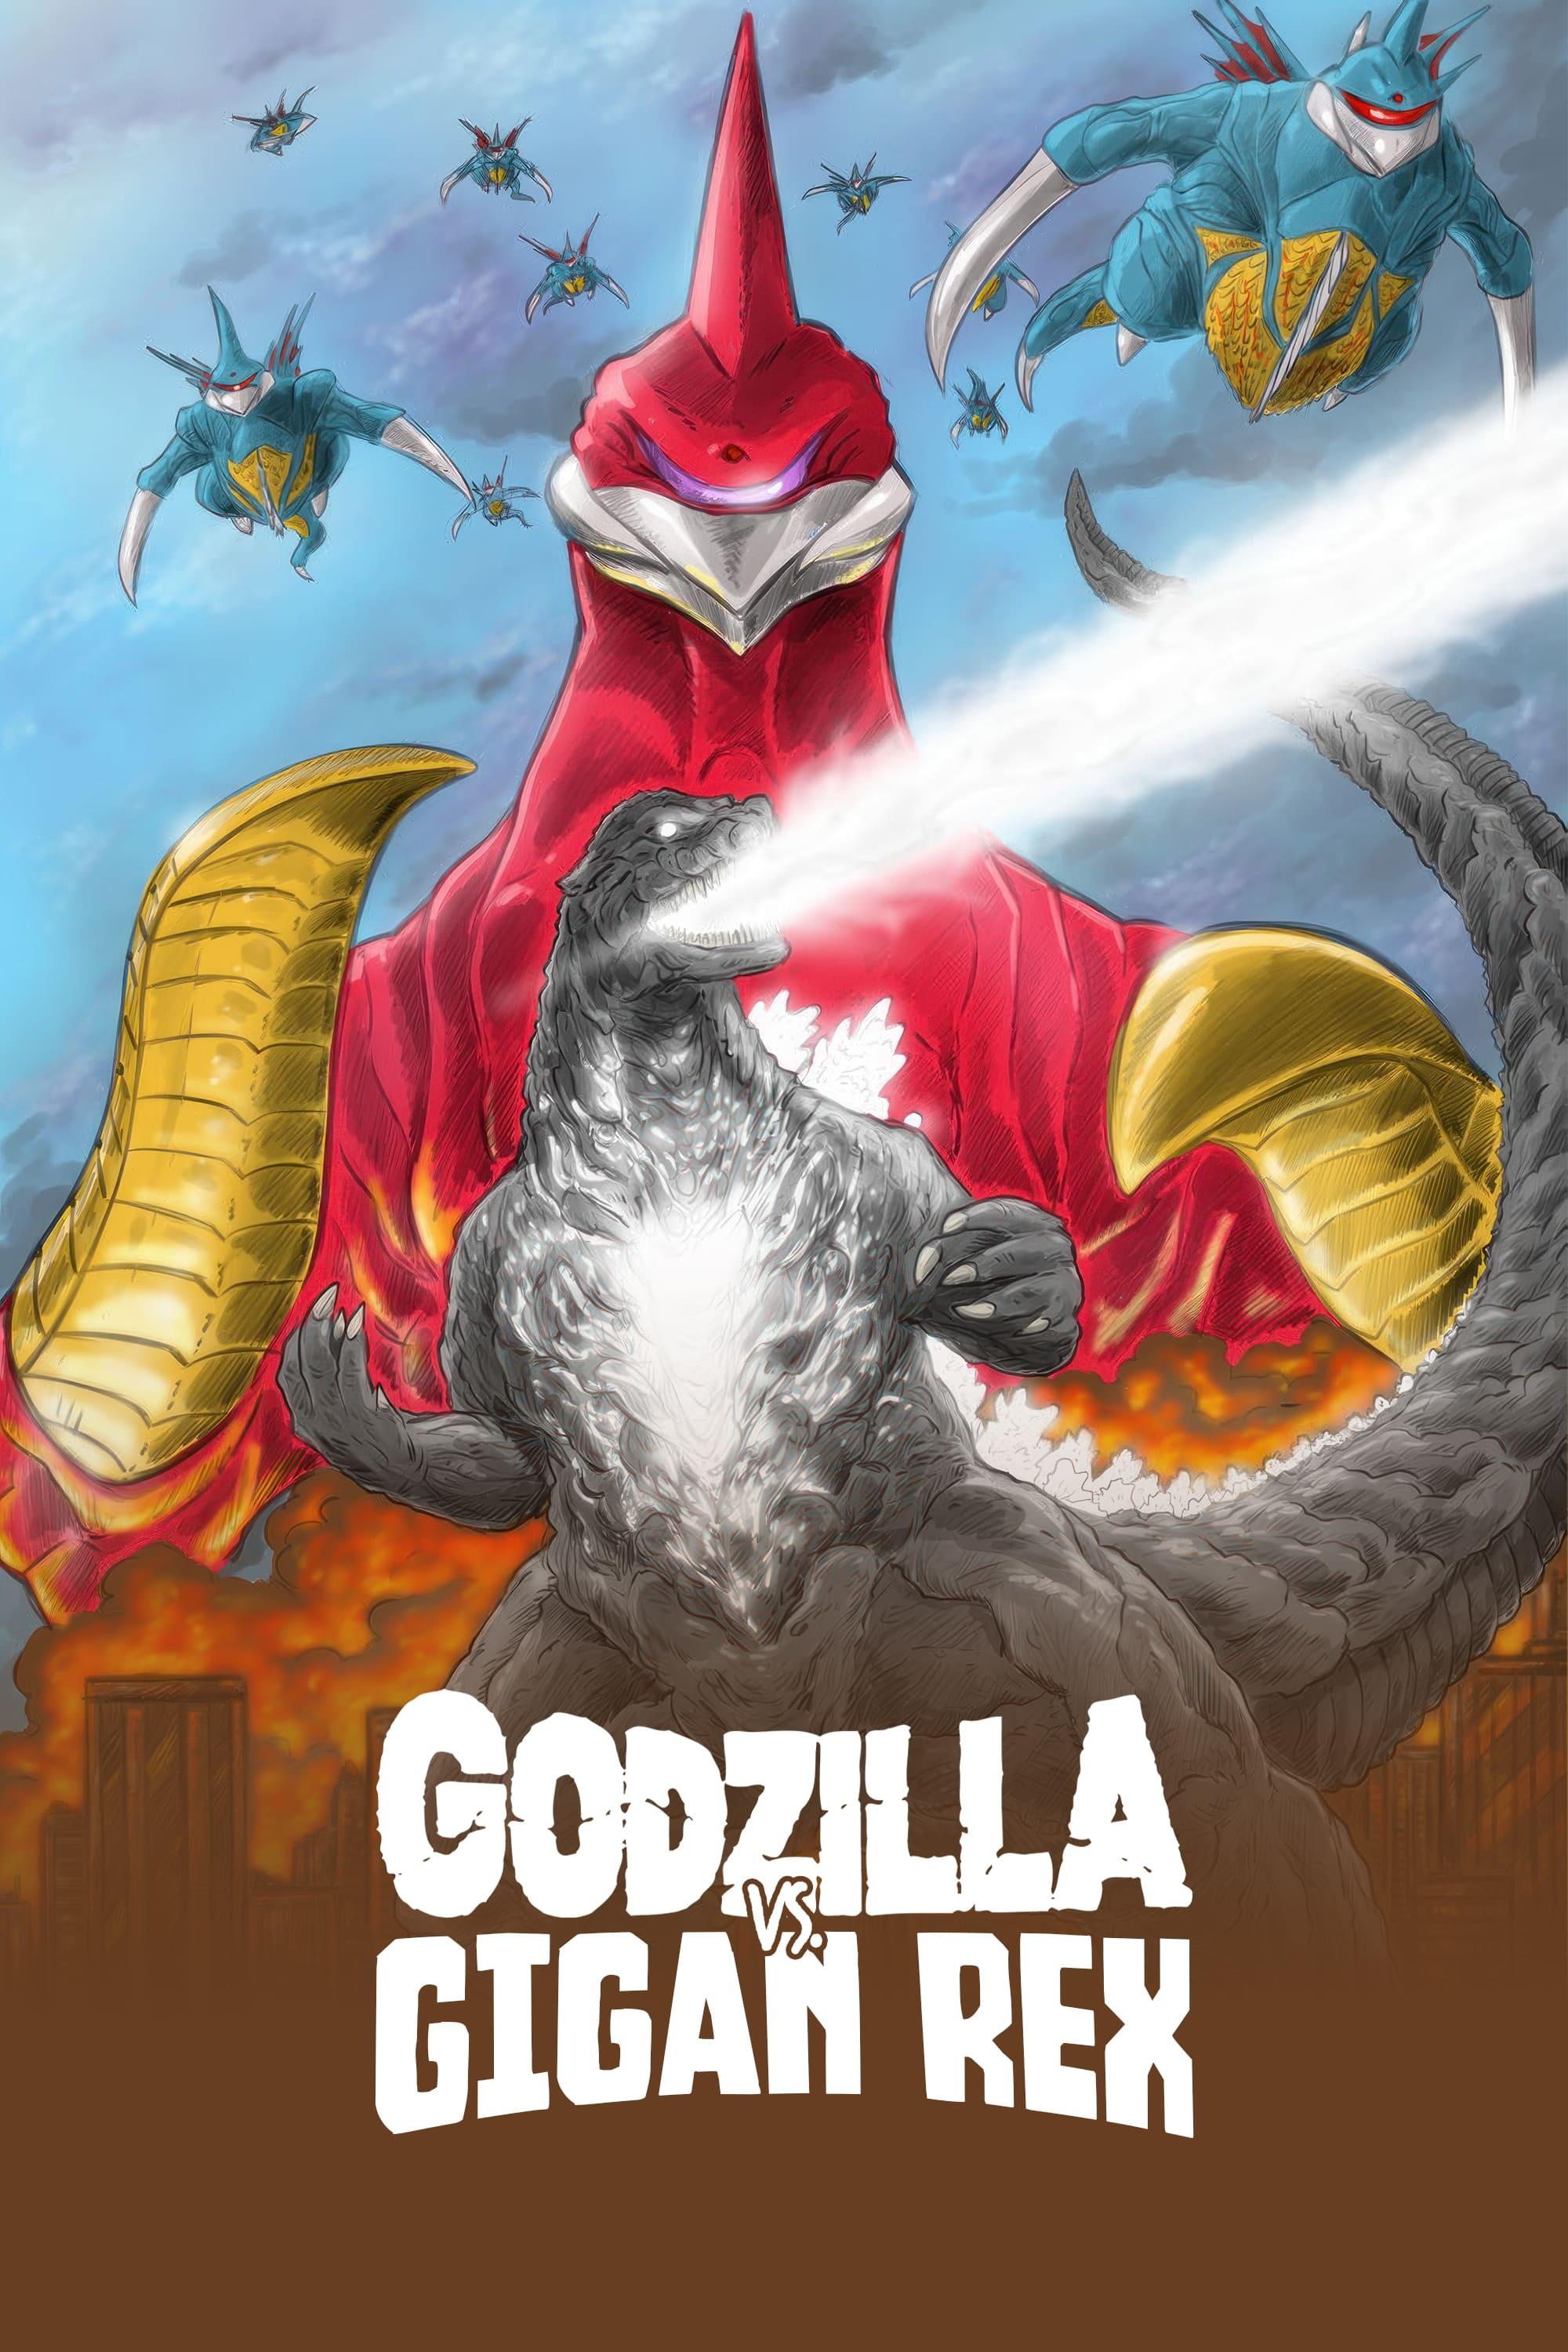 Godzilla vs. Gigan Rex poster